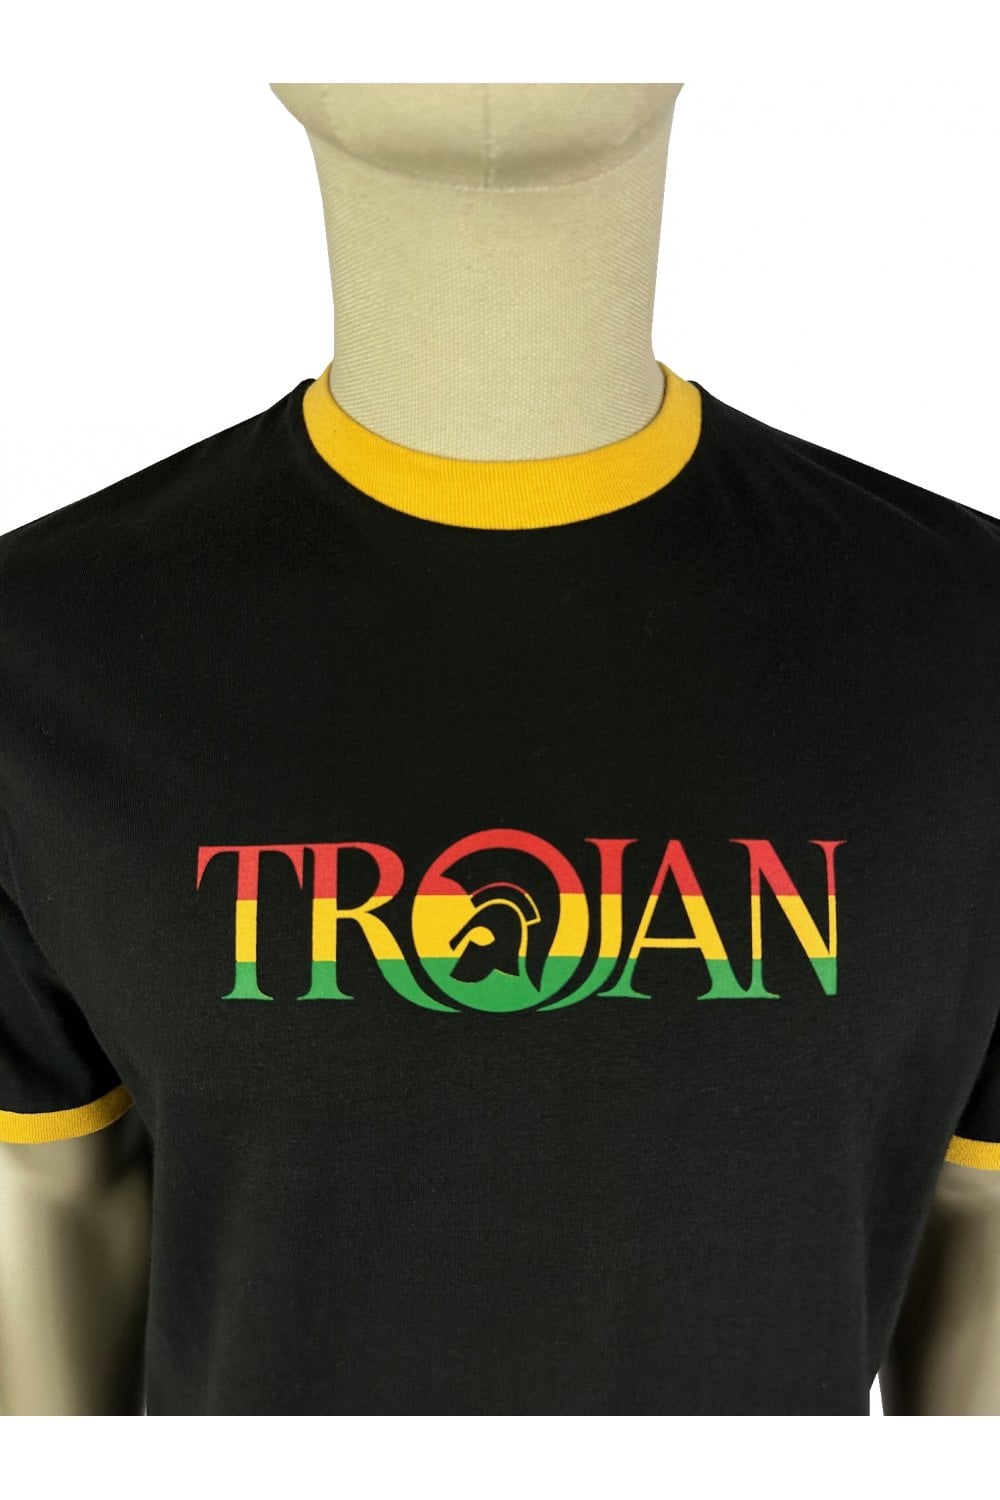 TROJAN Logo Ringer Tee TC/1014 Rasta - Raw Menswear